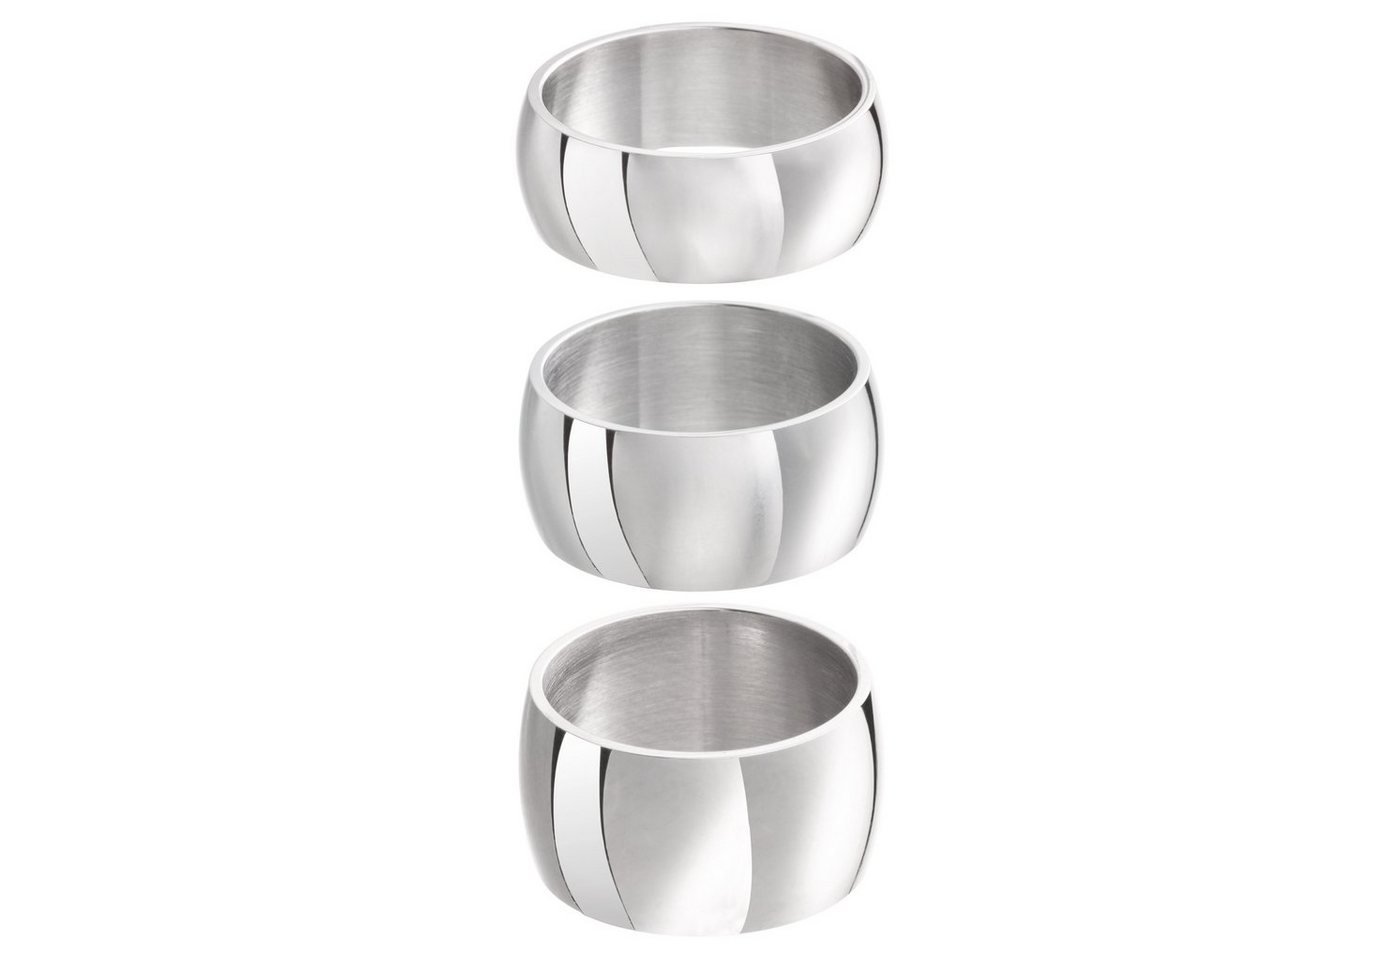 meditoys Fingerring meditoys · Ring aus Edelstahl für Damen und Herren · Bandring 12 mm breit · Silber poliert, Made in Germany von meditoys